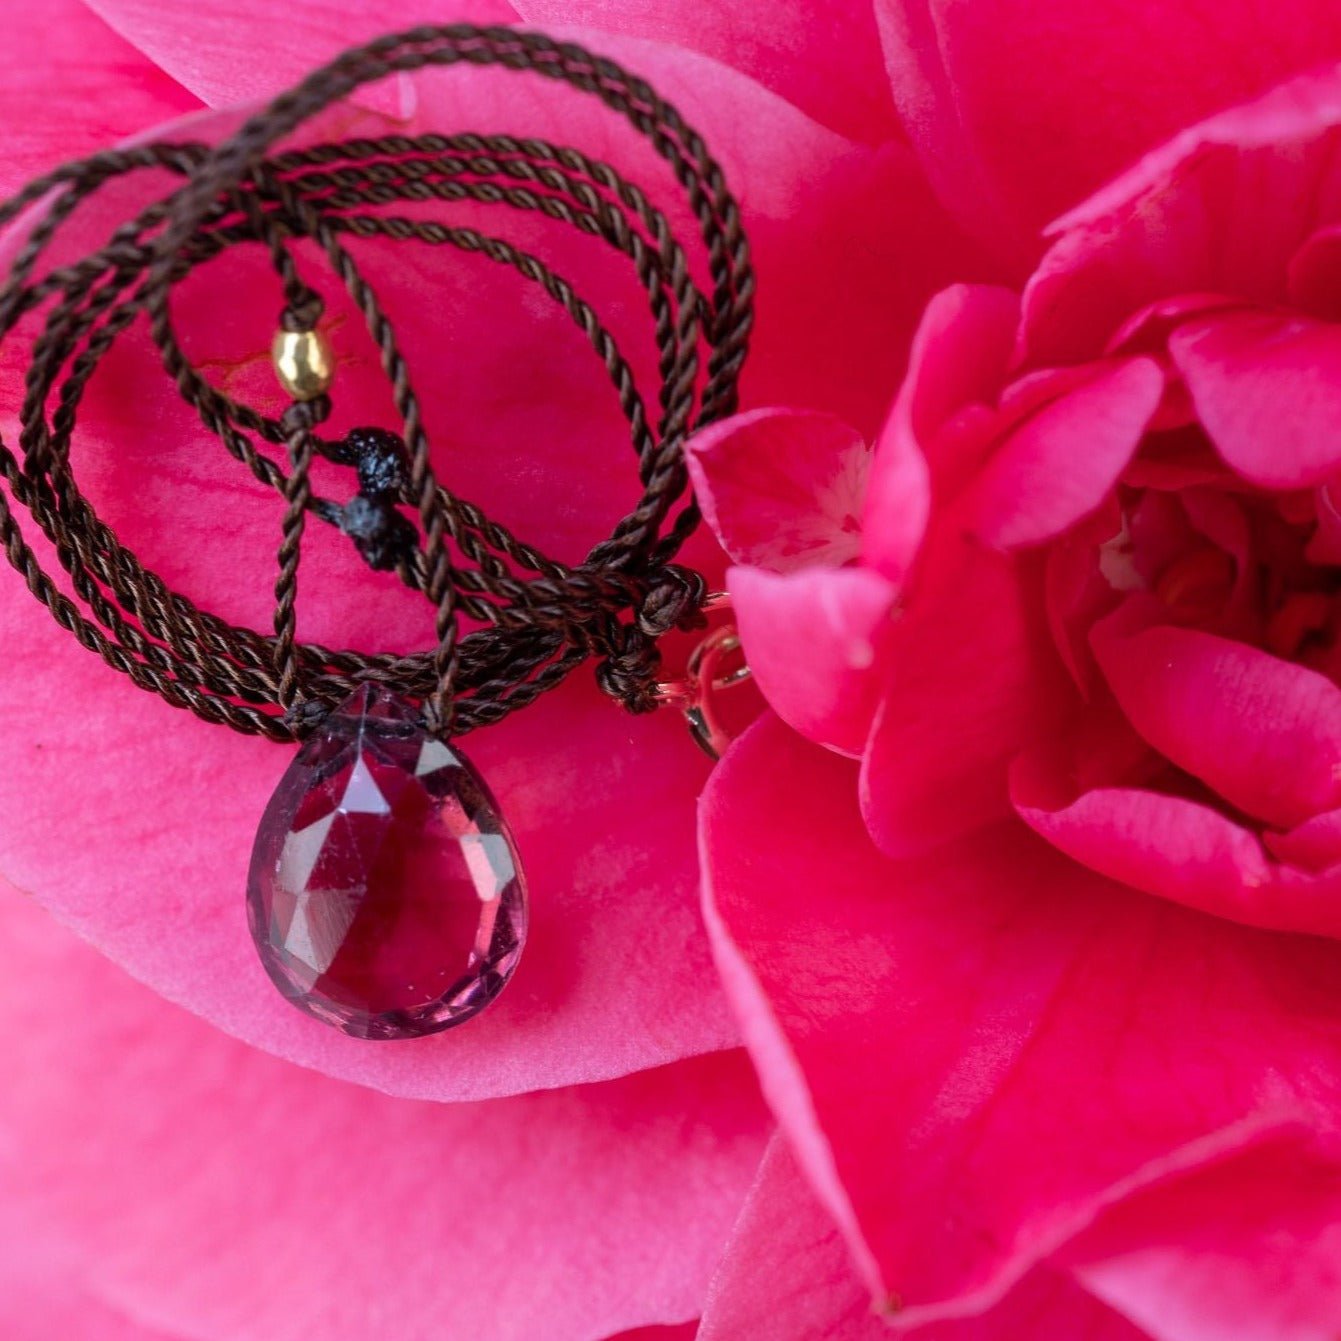 Cranberry Tourmaline + 18K Bead Necklace